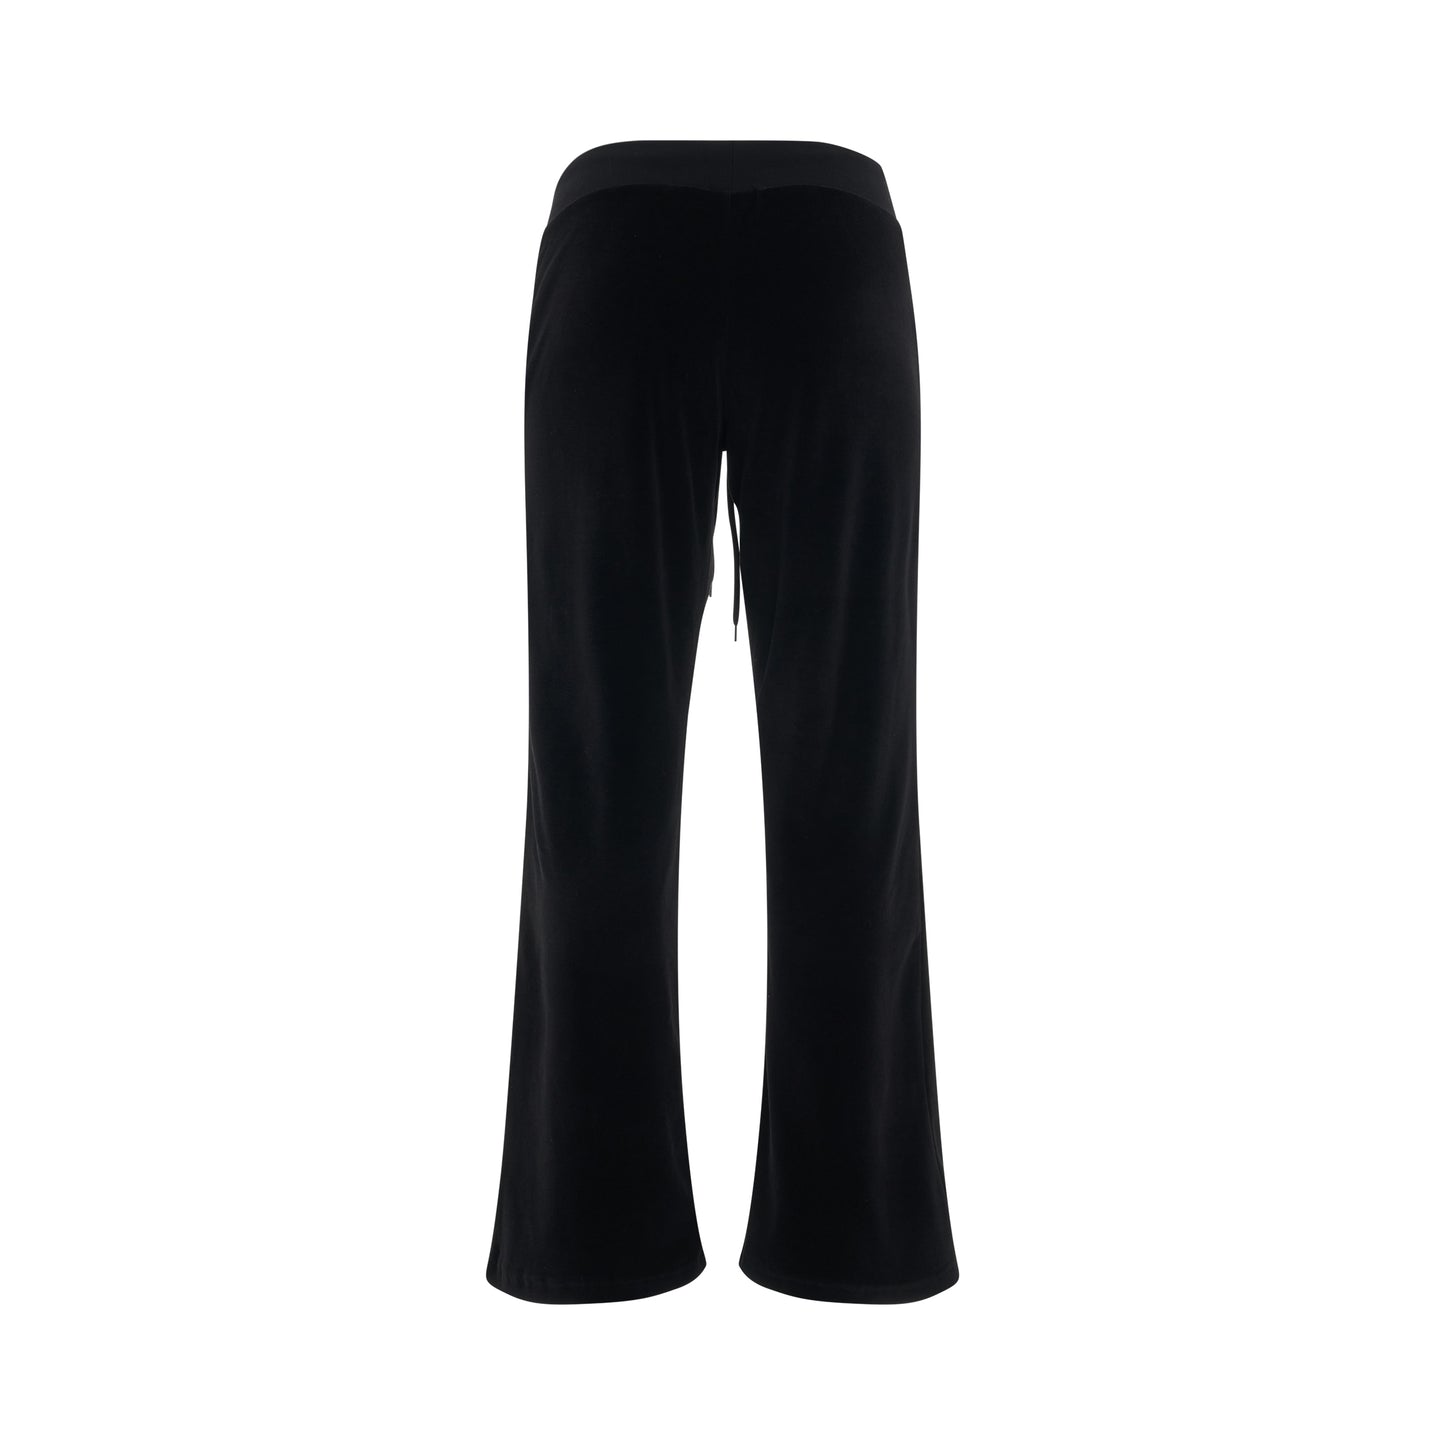 Low-Waist Velvet Joggers Pants in Black